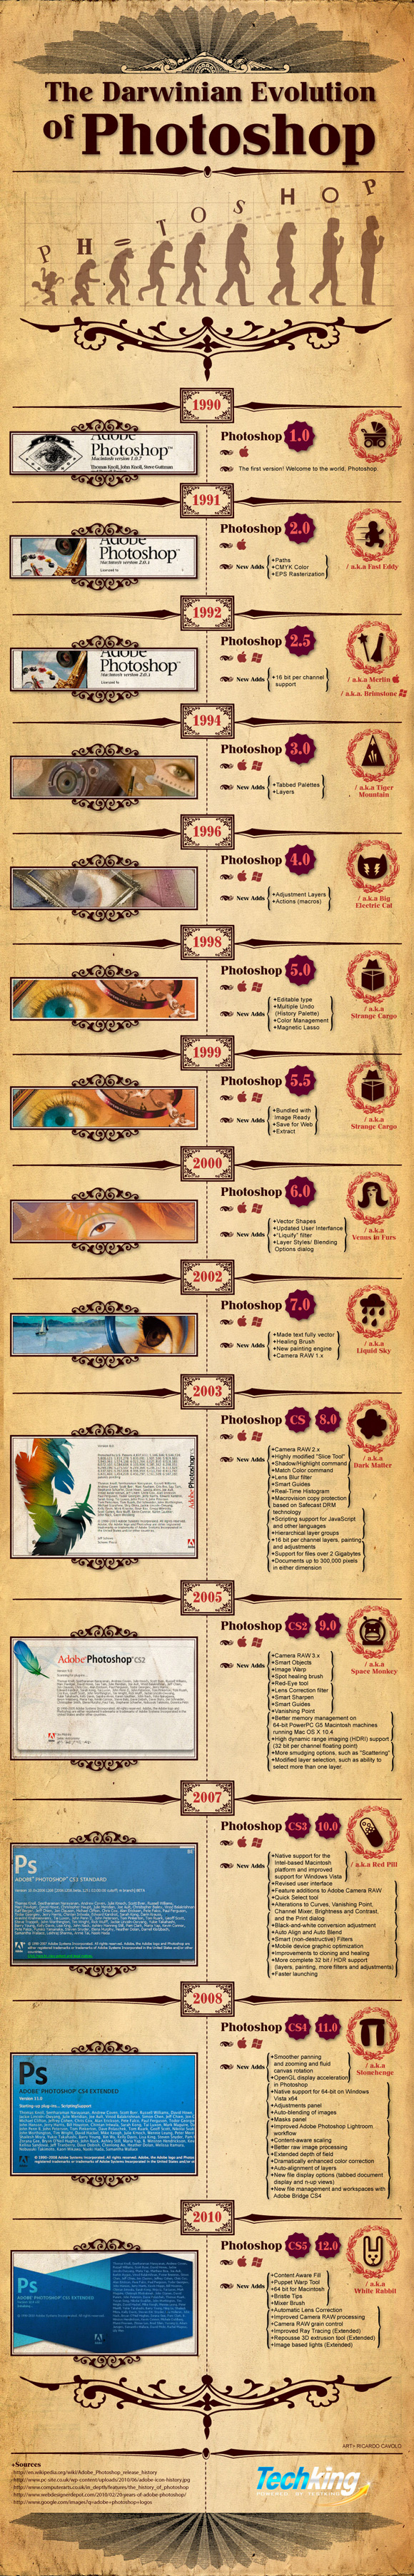 Infographic - Photoshop Timeline